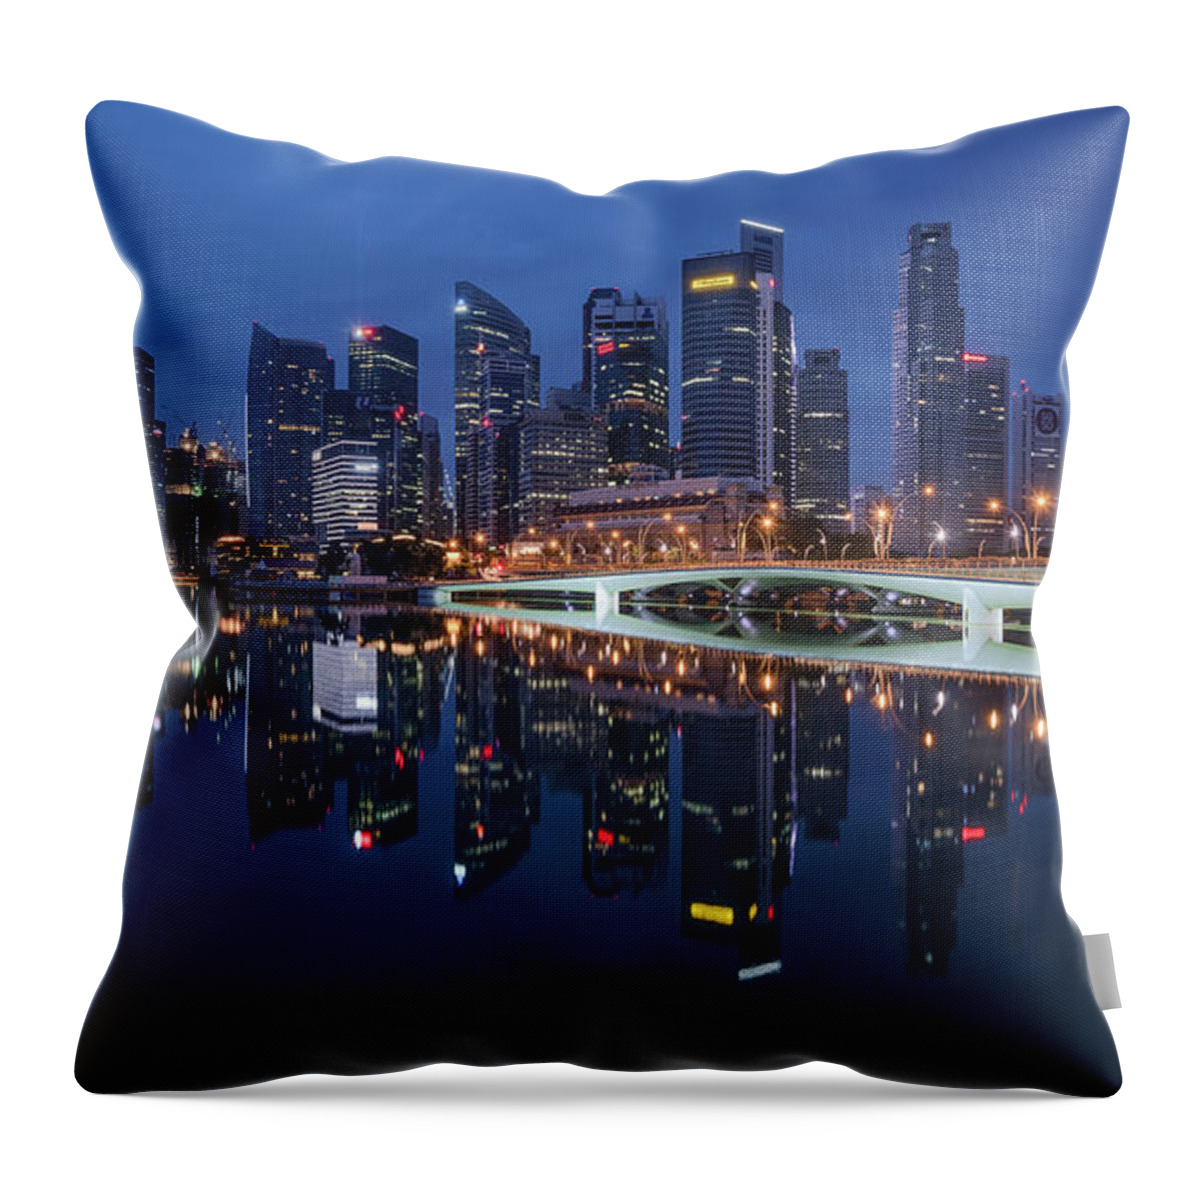 Lights Throw Pillow featuring the photograph Singapore skyline reflection by Pradeep Raja Prints